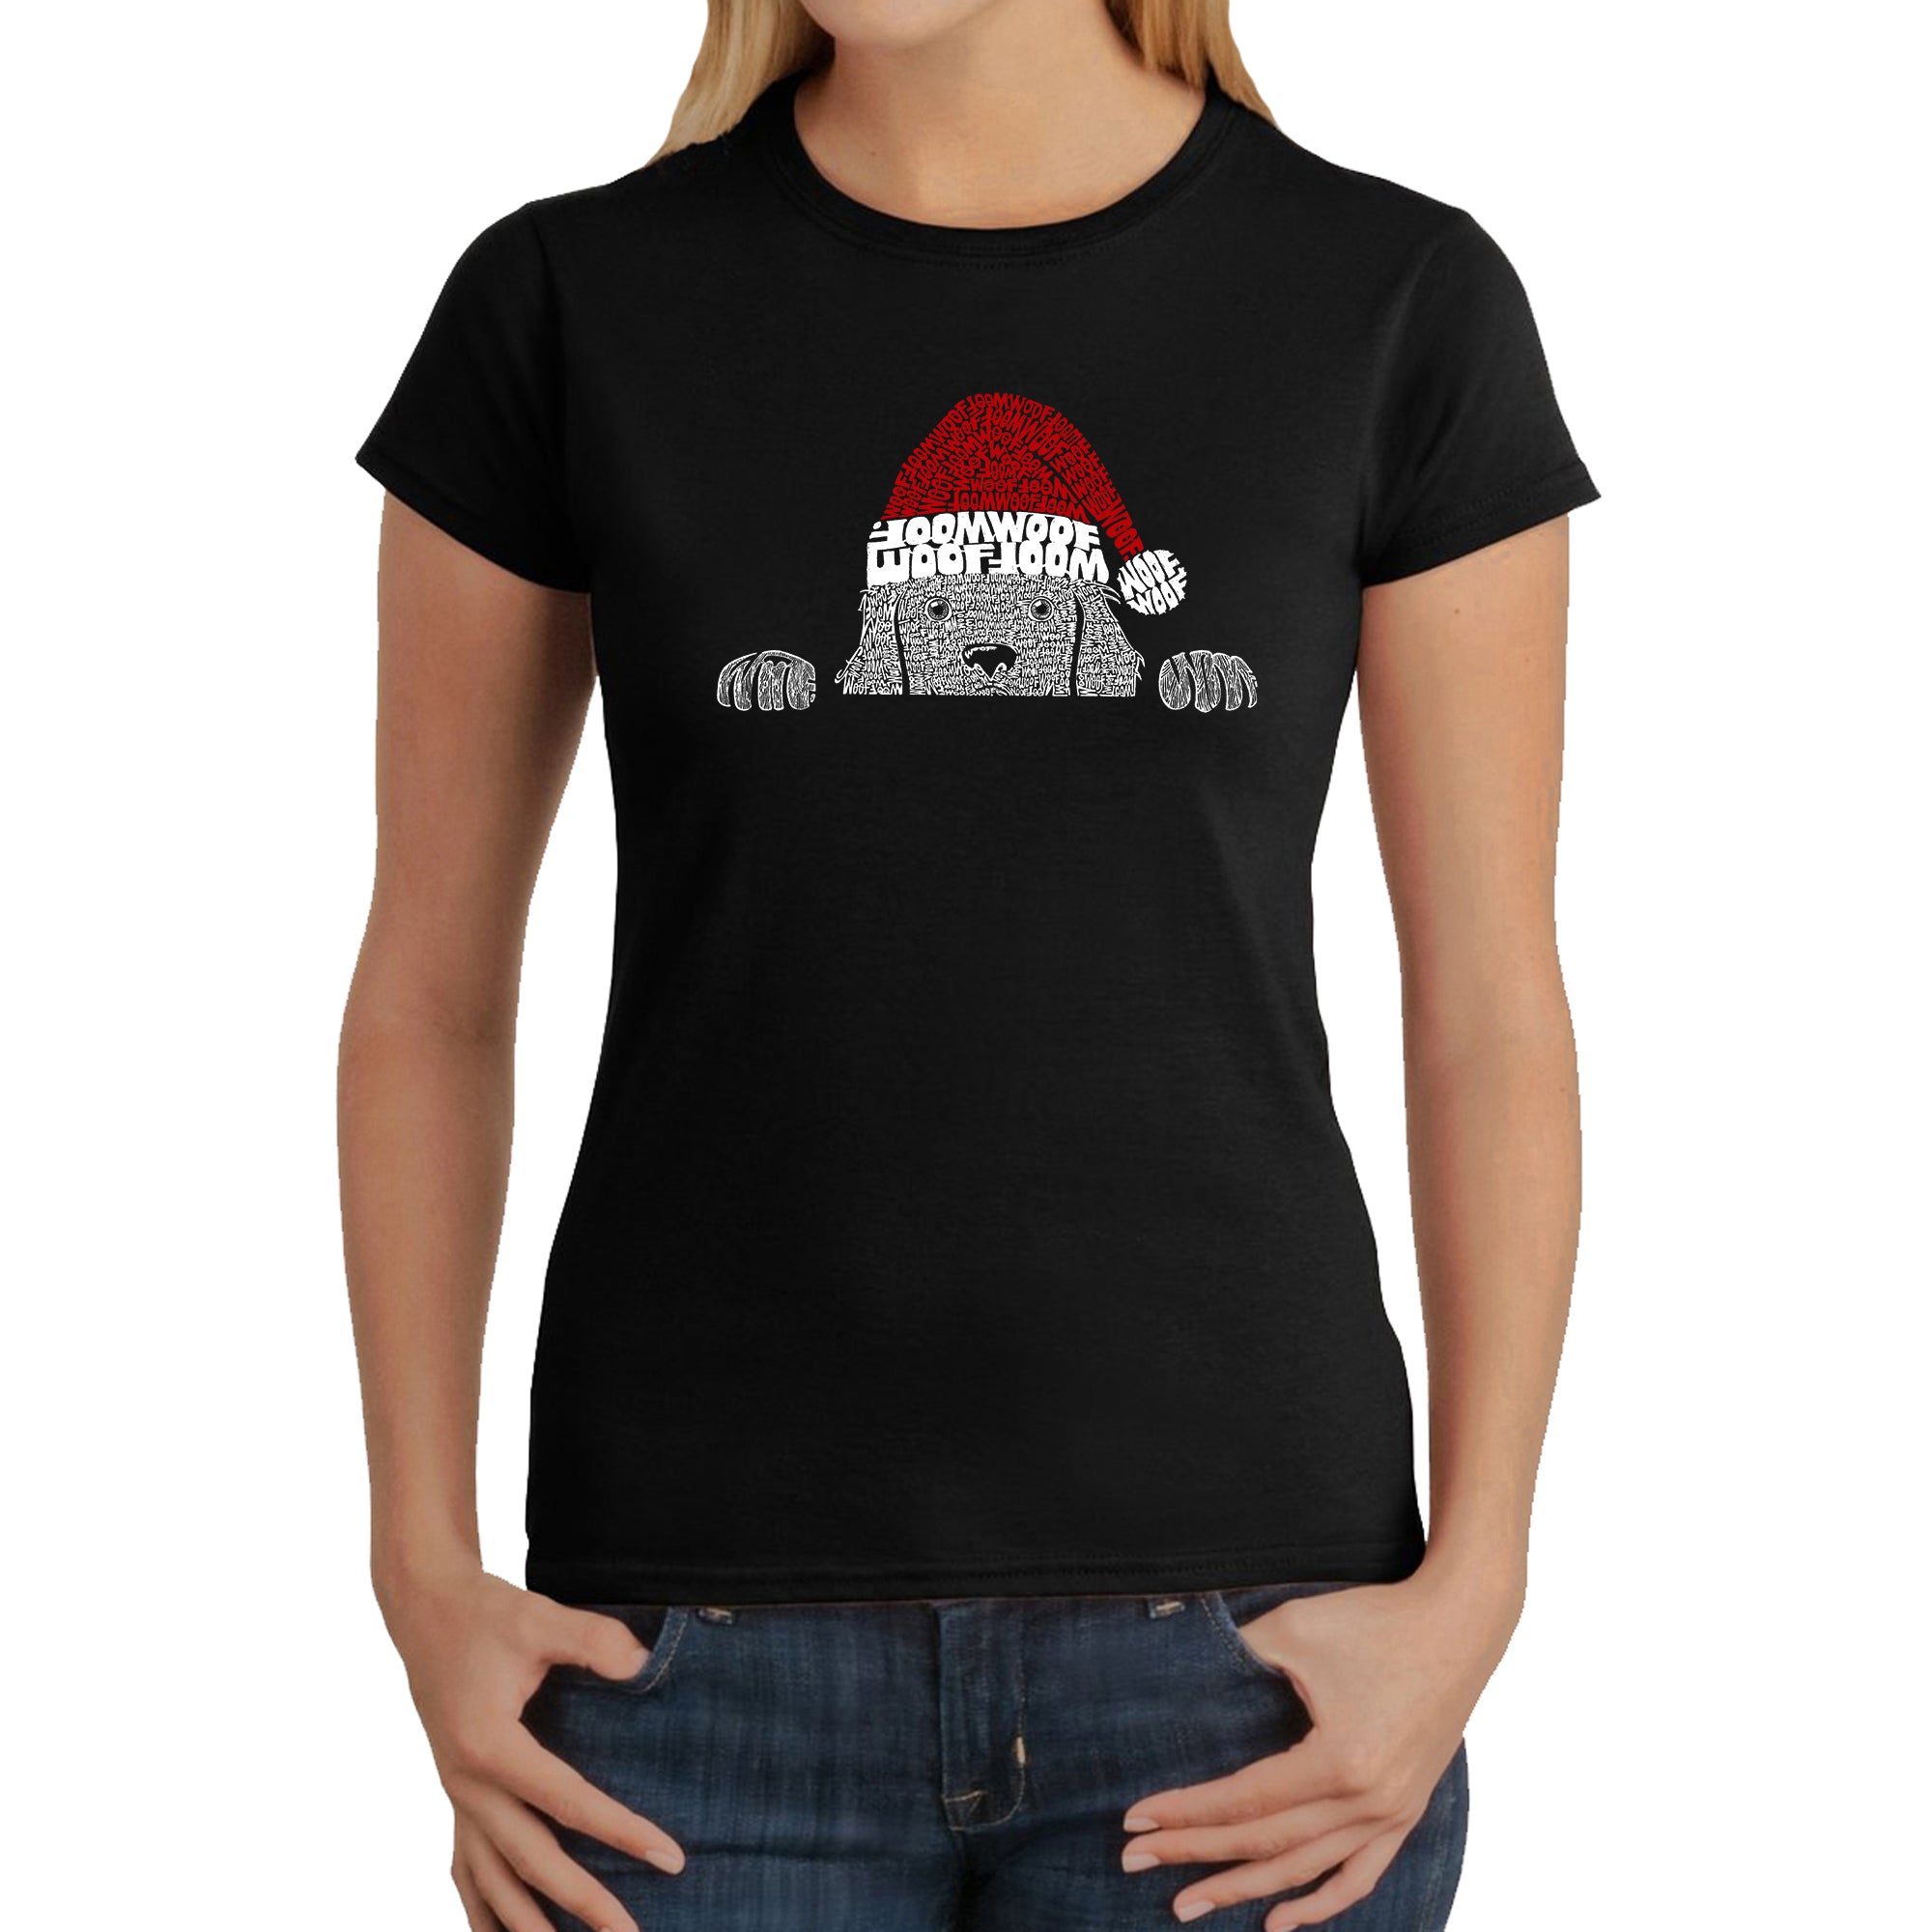 Christmas Peeking Dog - Women's Word Art T-Shirt - Red - Large